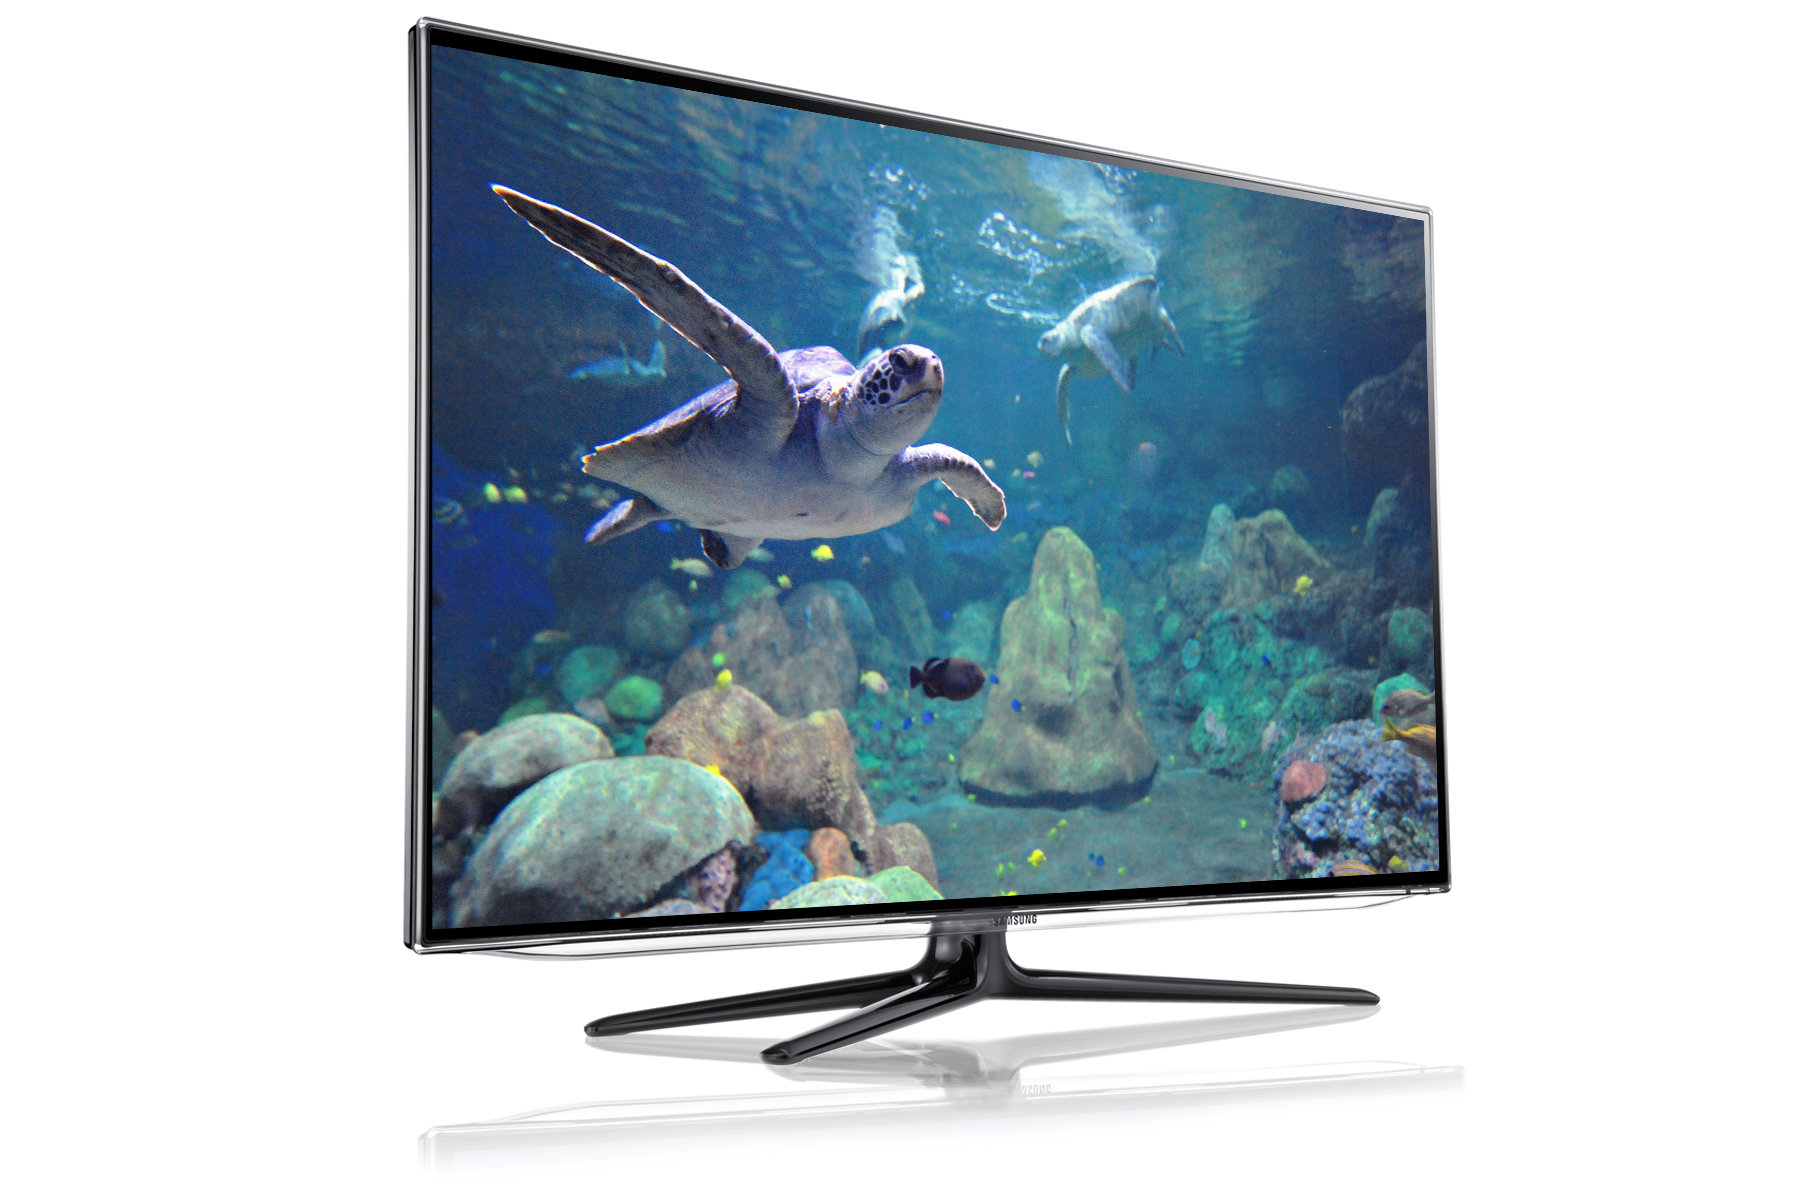 Samsung 32t5300 Smart Tv